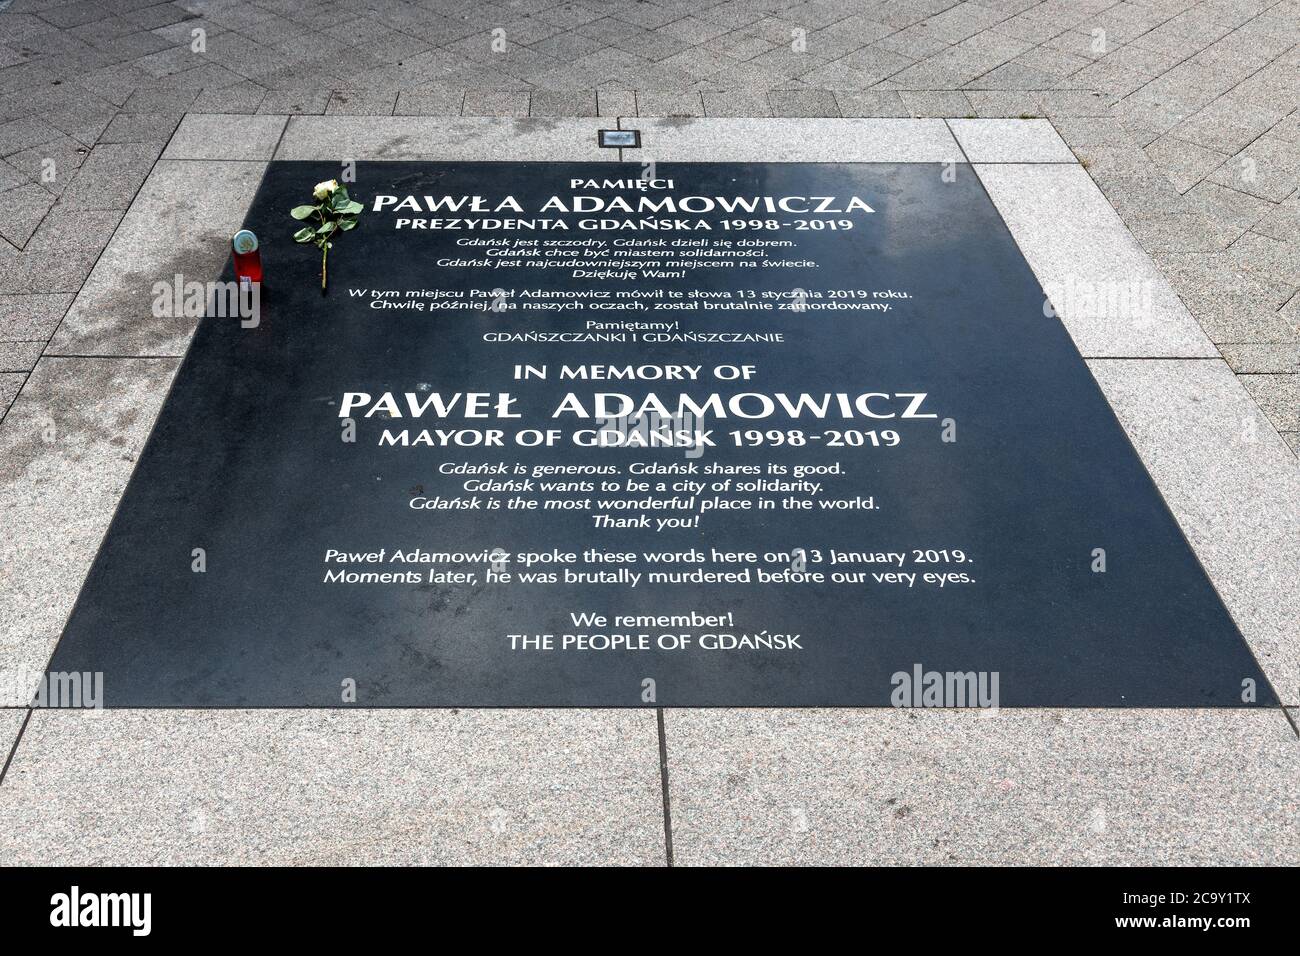 Gdansk, Pomerania / Poland - 2020/07/14: Memorial of Pawel Adamowicz, major of Gdansk, in place of mortal public assassination on January 13, 2019 Stock Photo